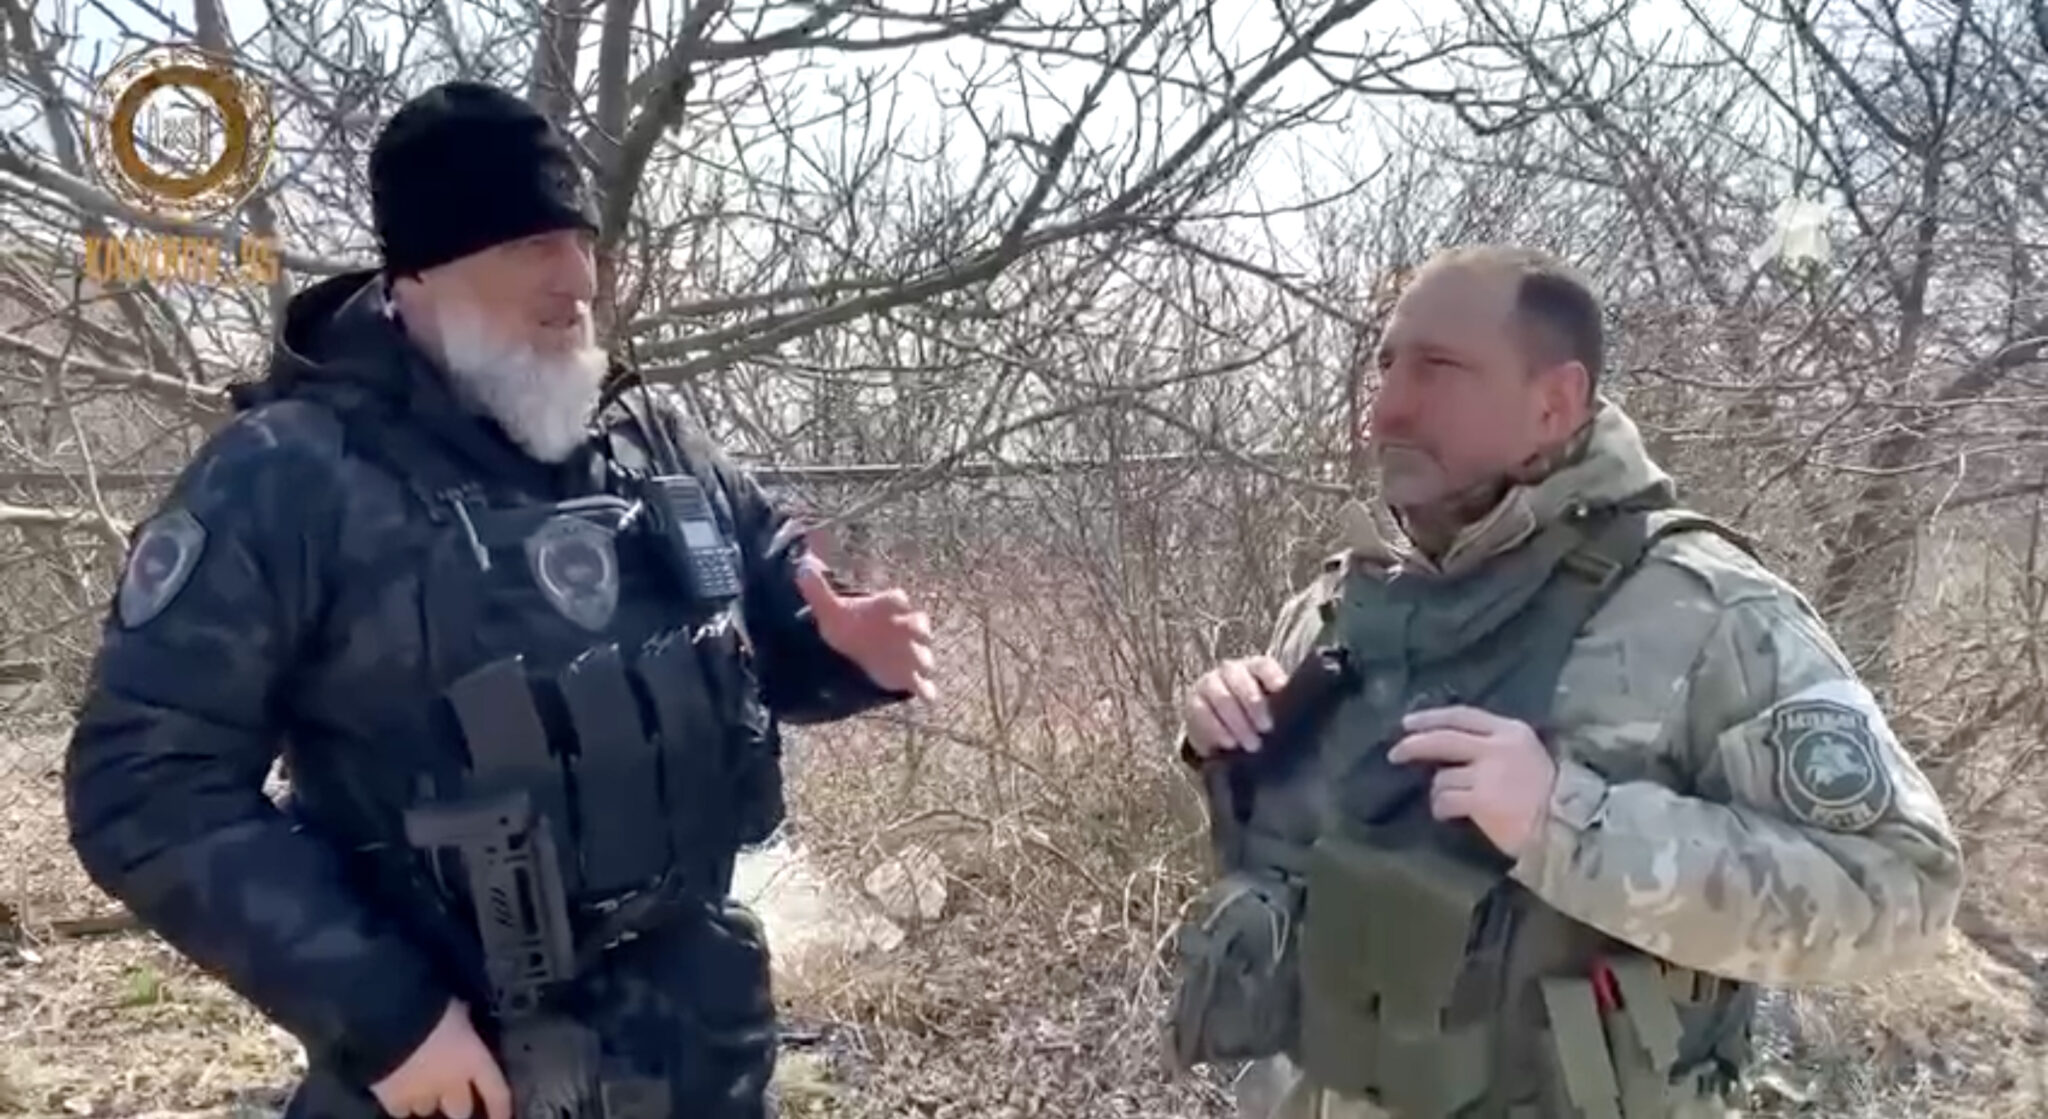 Адам Делимханов и Александр Ходаковский.
Скриншот видео из телеграм-канала Kadyrov_95